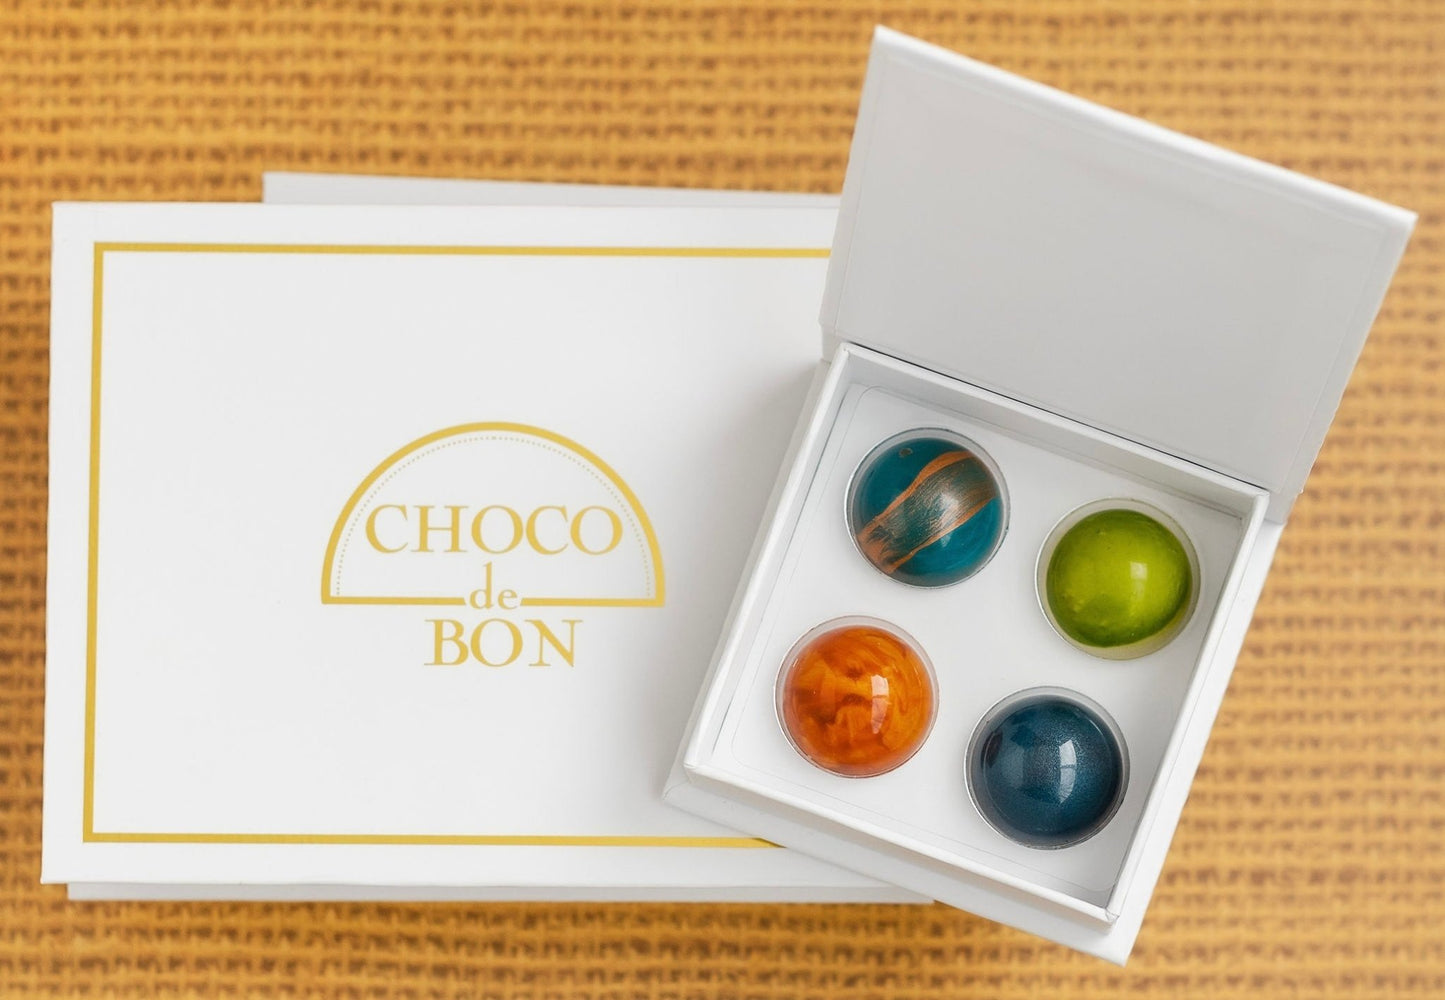 #chocolate##chocodebon##bonbon#